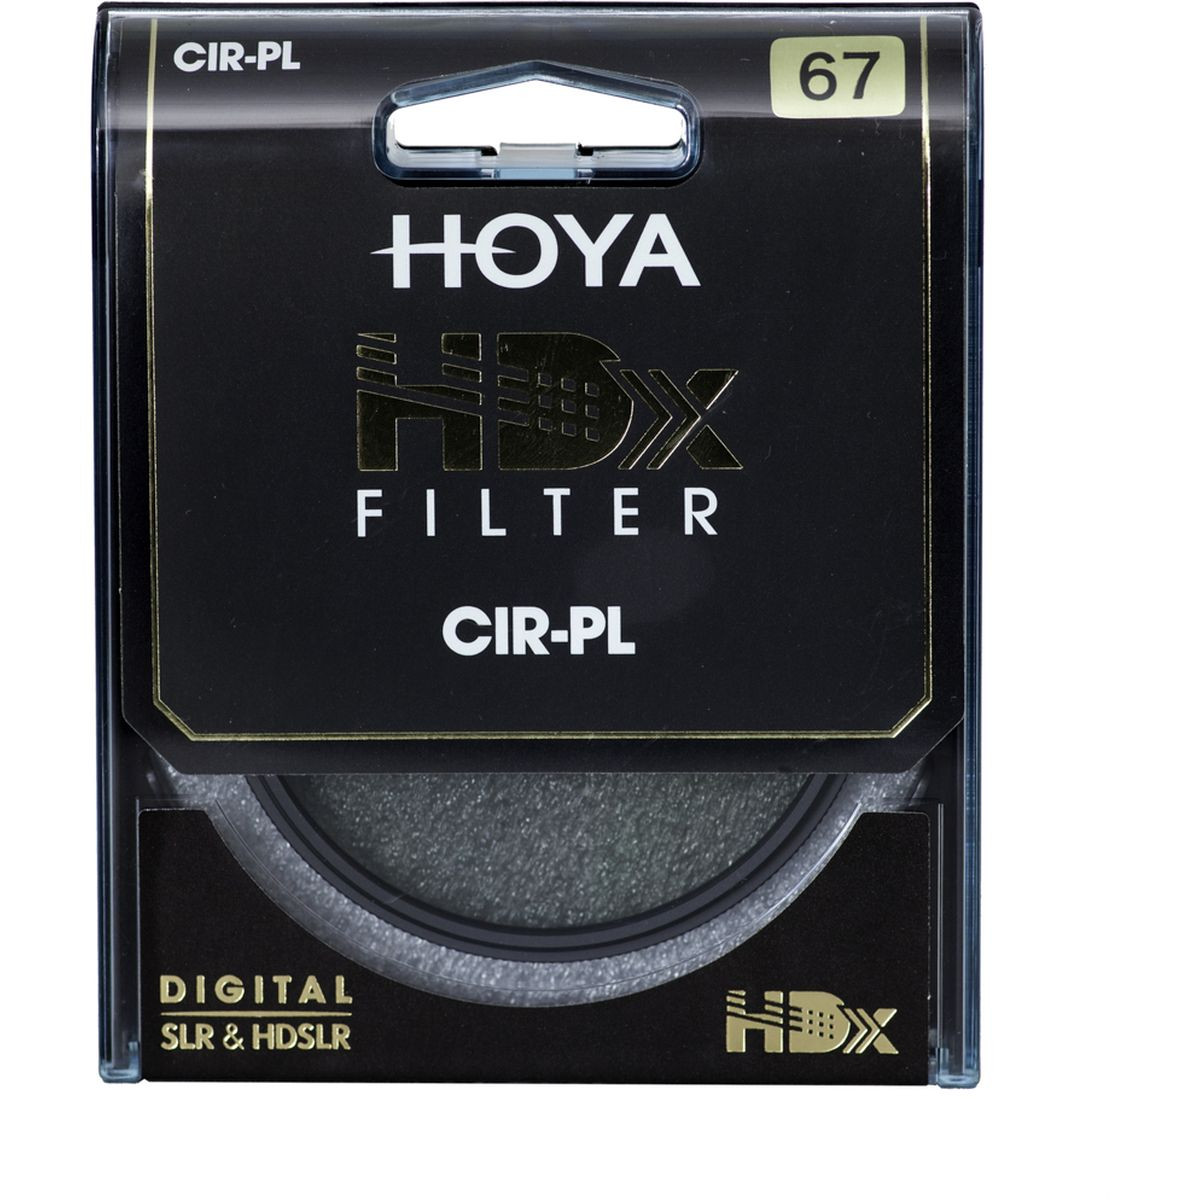 Hoya 49.0mm HDX Circulair Polarisatie